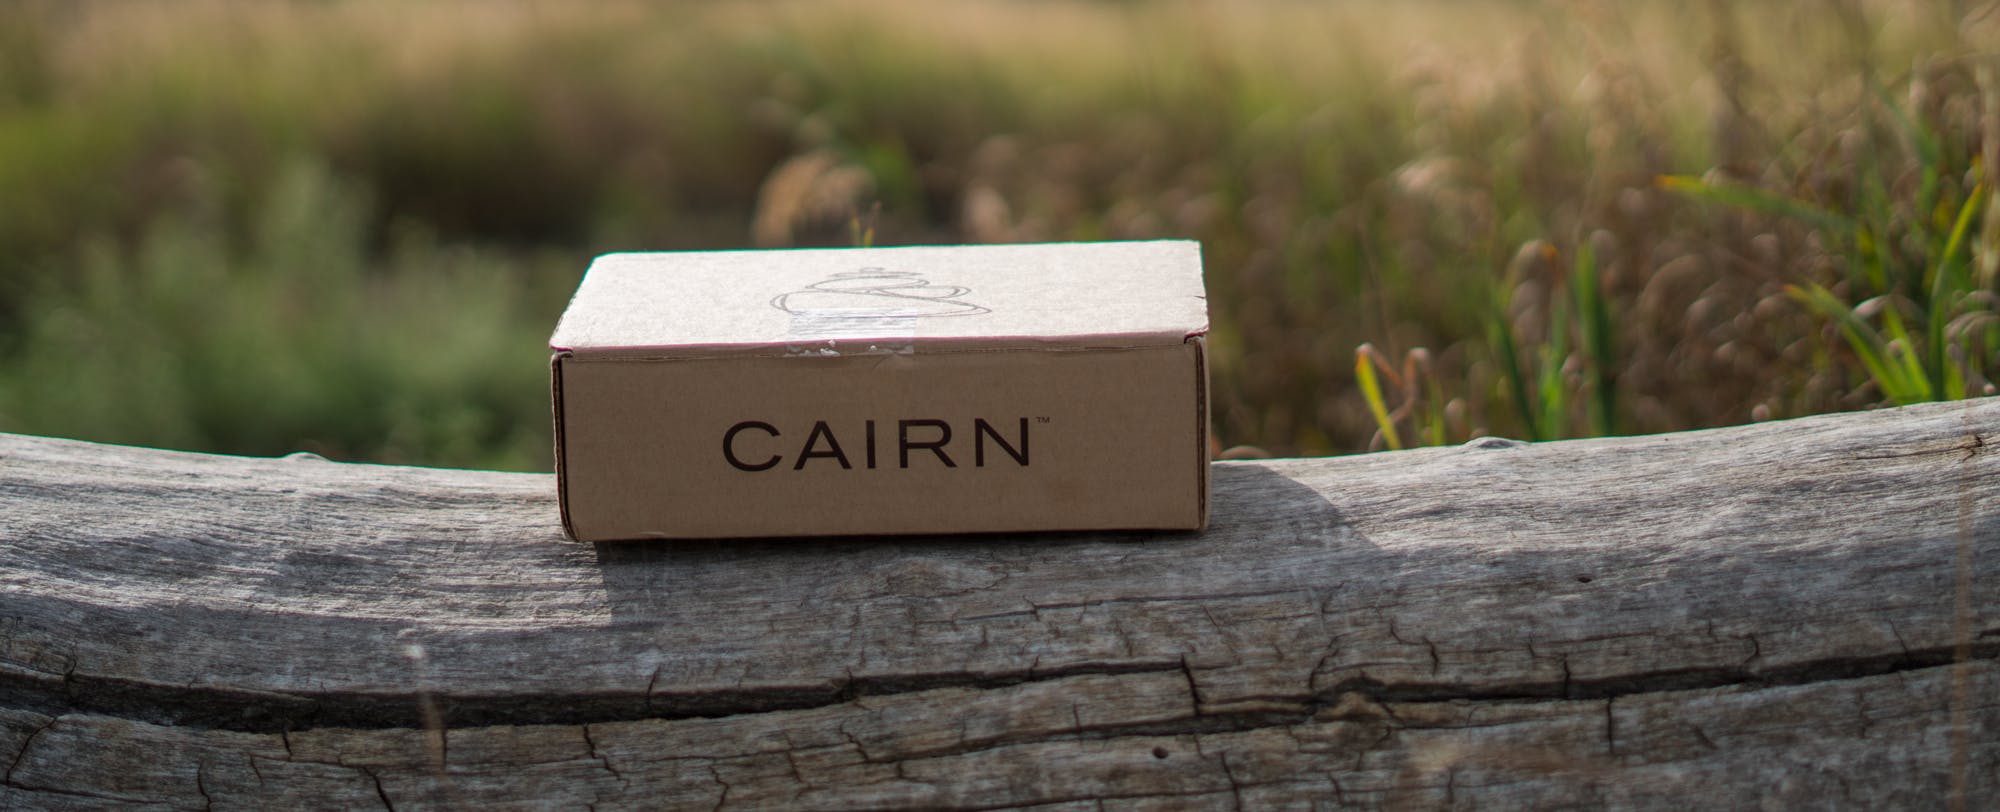 Cairn: The Subscription Box for an Adventurous Life